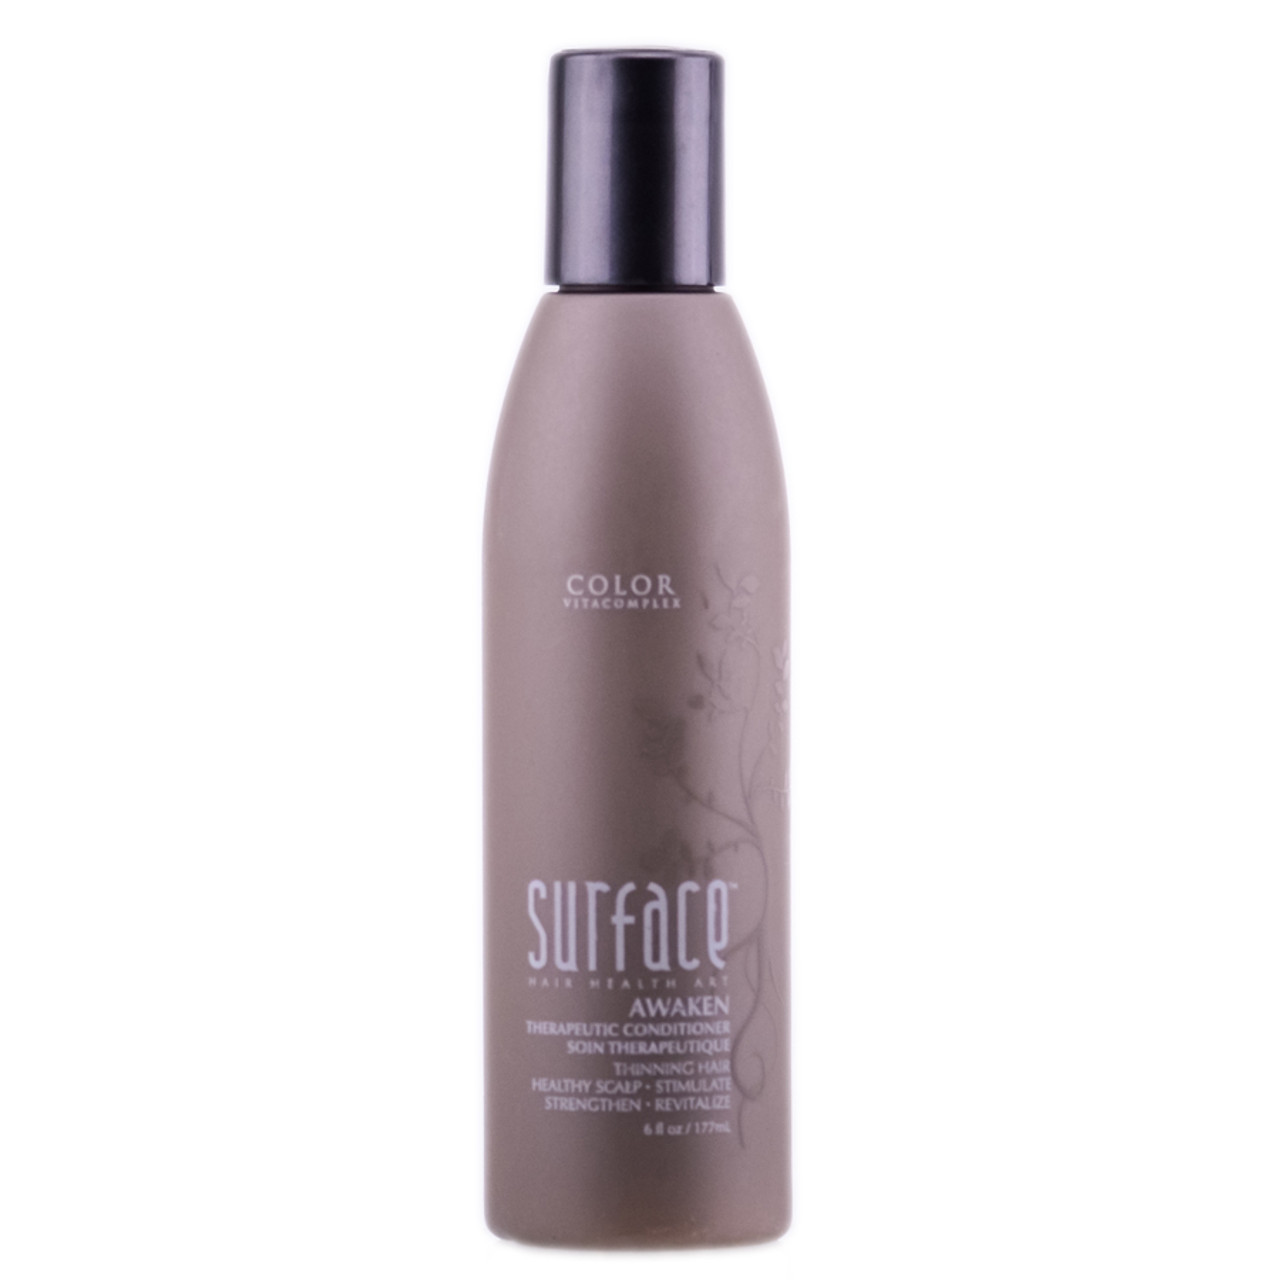 surface awaken shampoo and conditioner